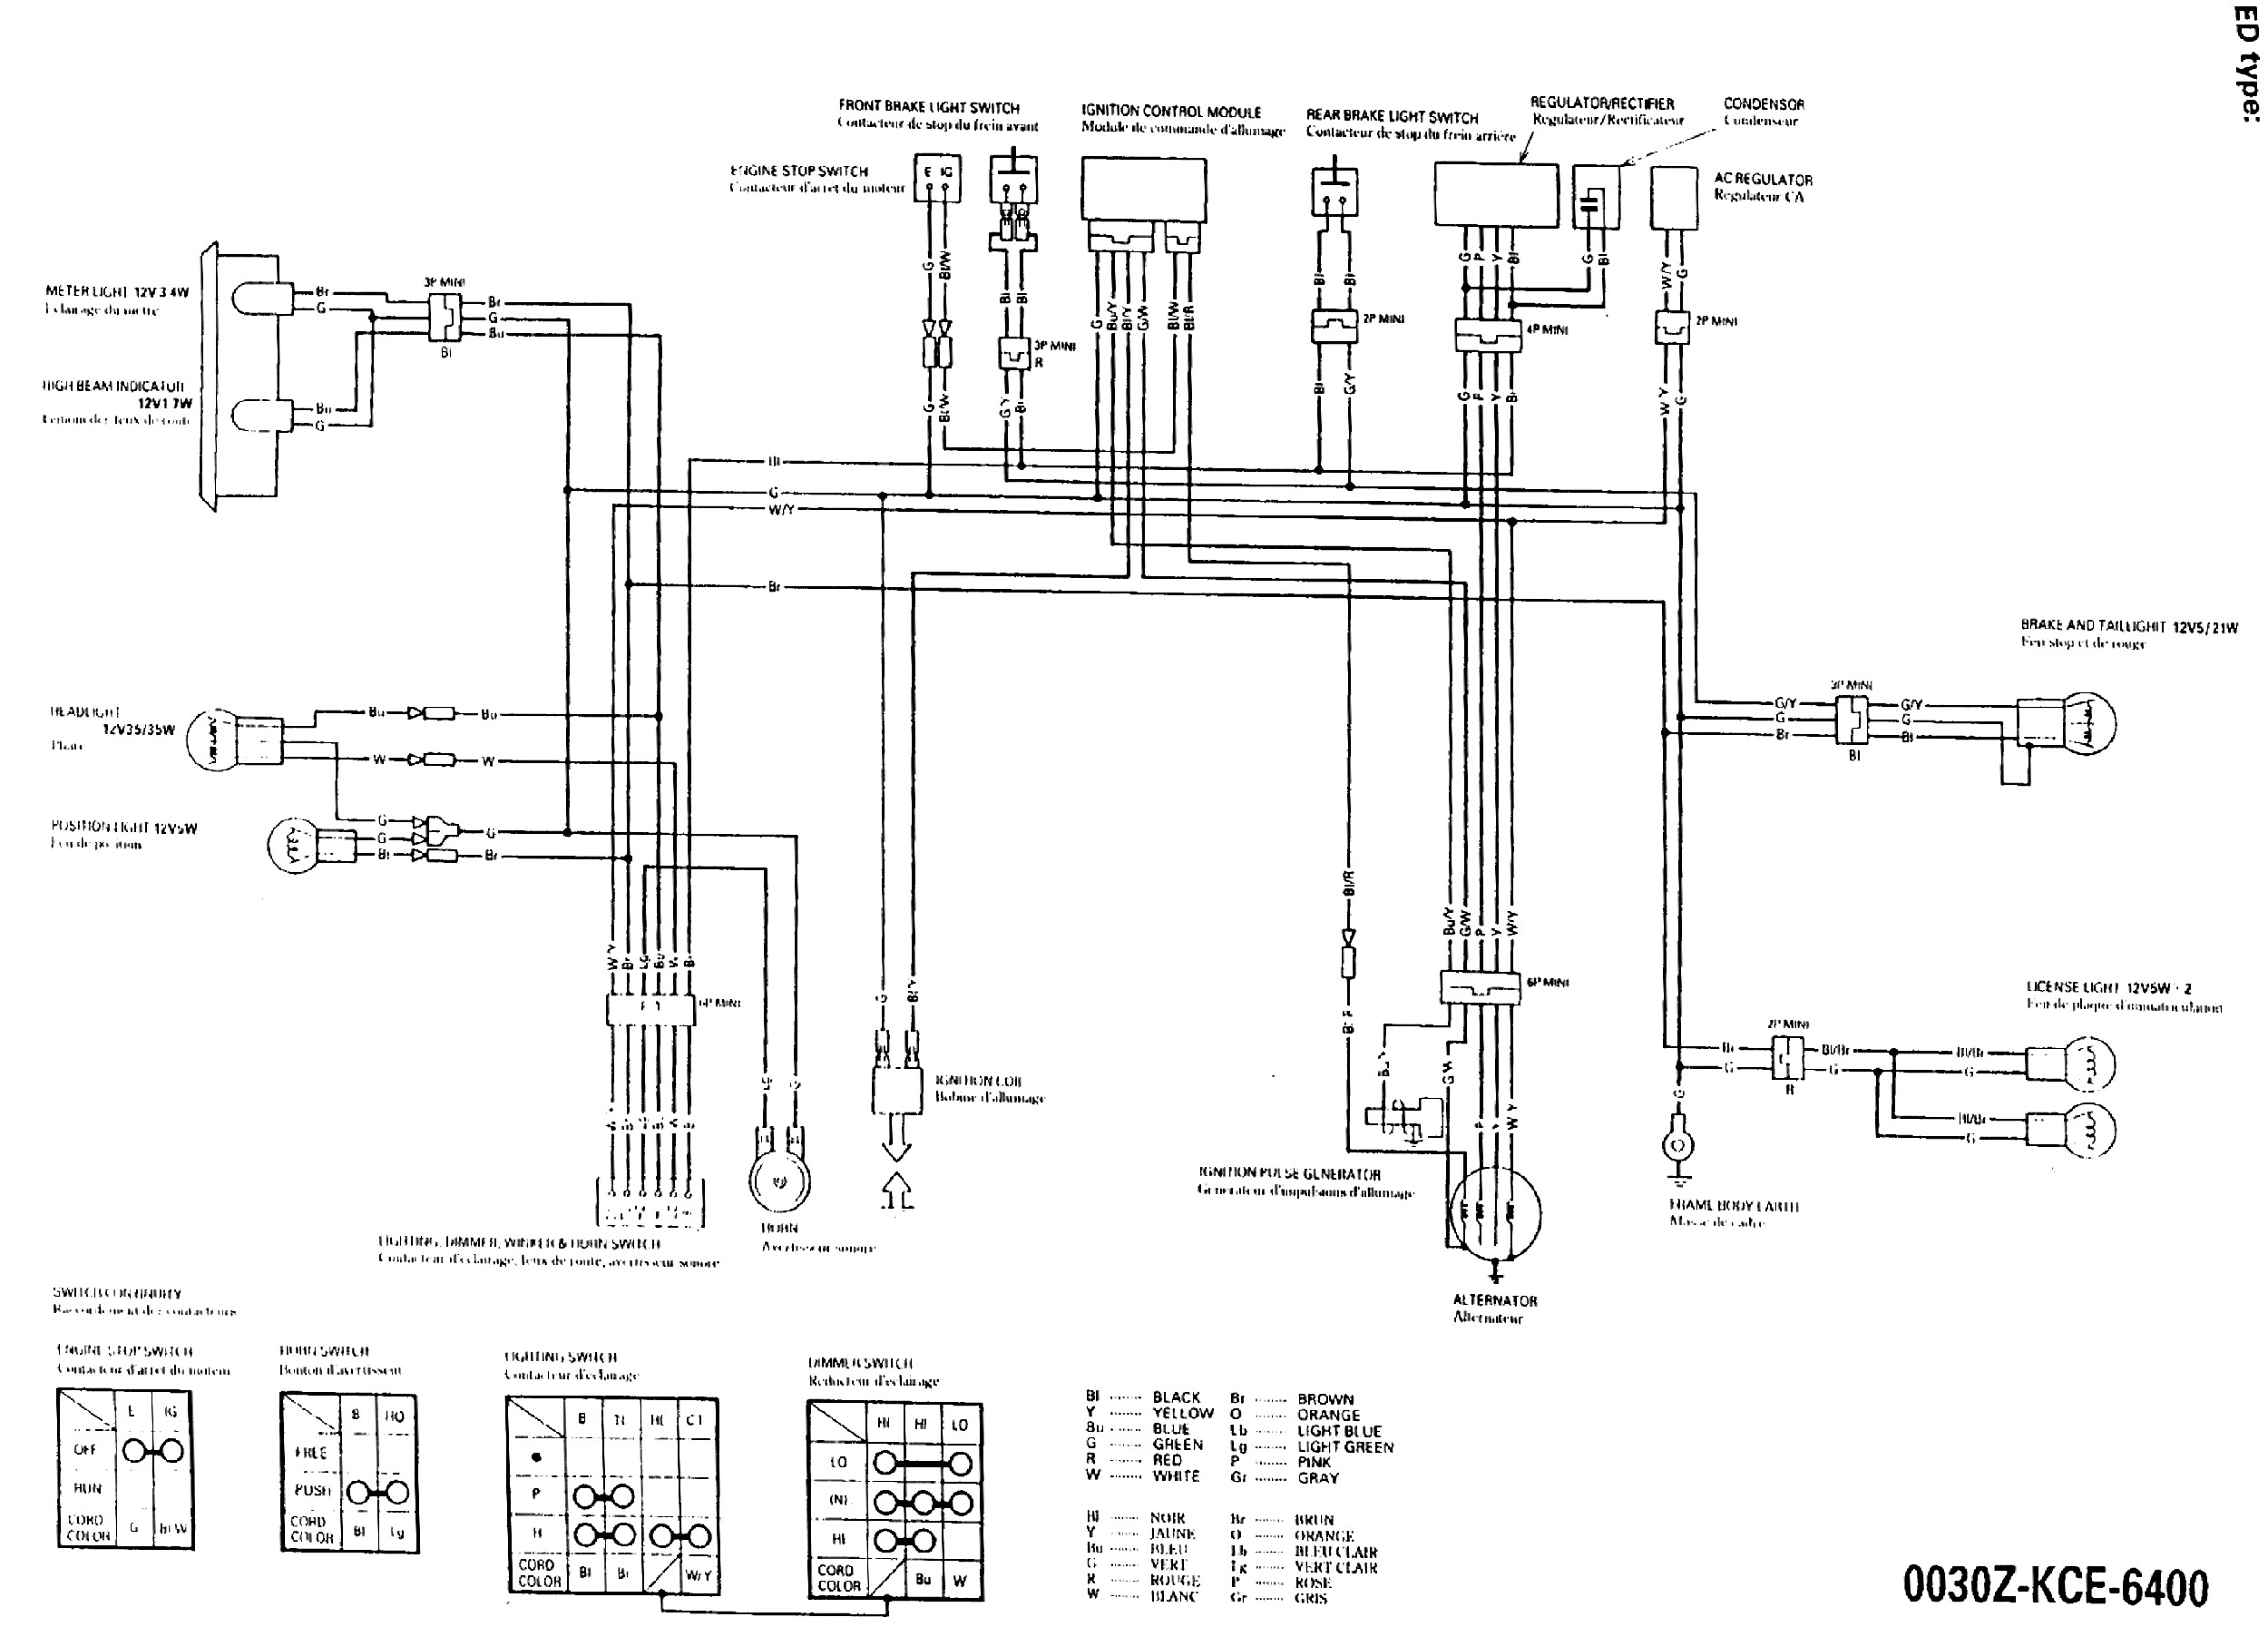 1996 Honda Accord Engine Diagram Honda Xr250r Wiring Diagram Honda Wiring Diagrams Instructions Of 1996 Honda Accord Engine Diagram